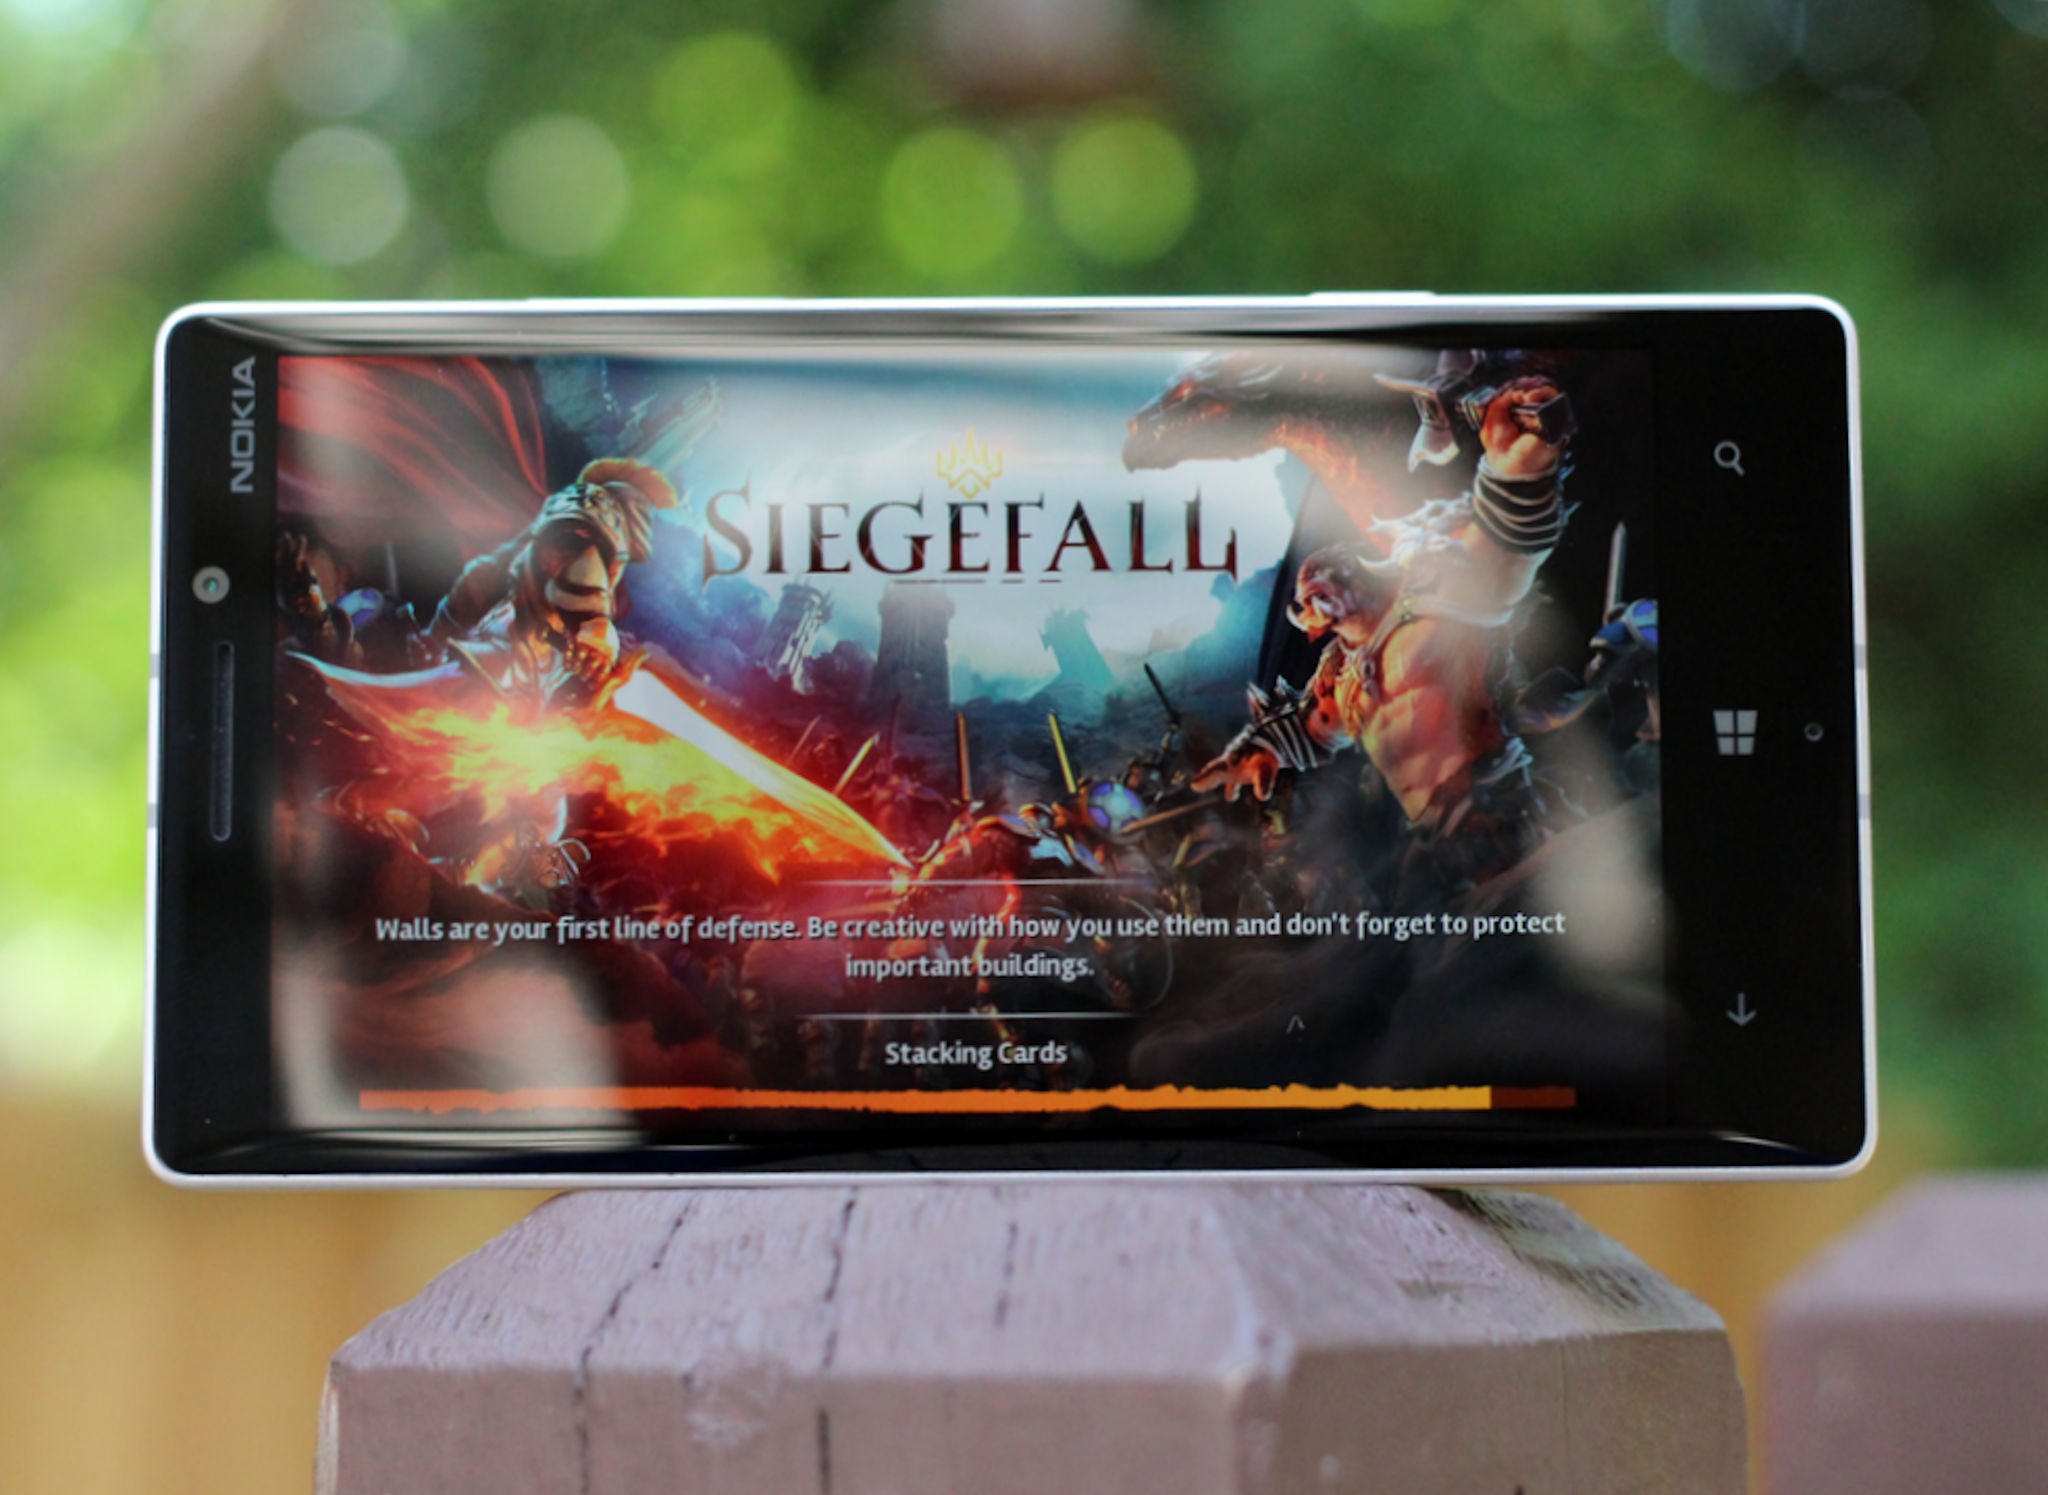 Siegefall-Windows-Phone-photo.jpg